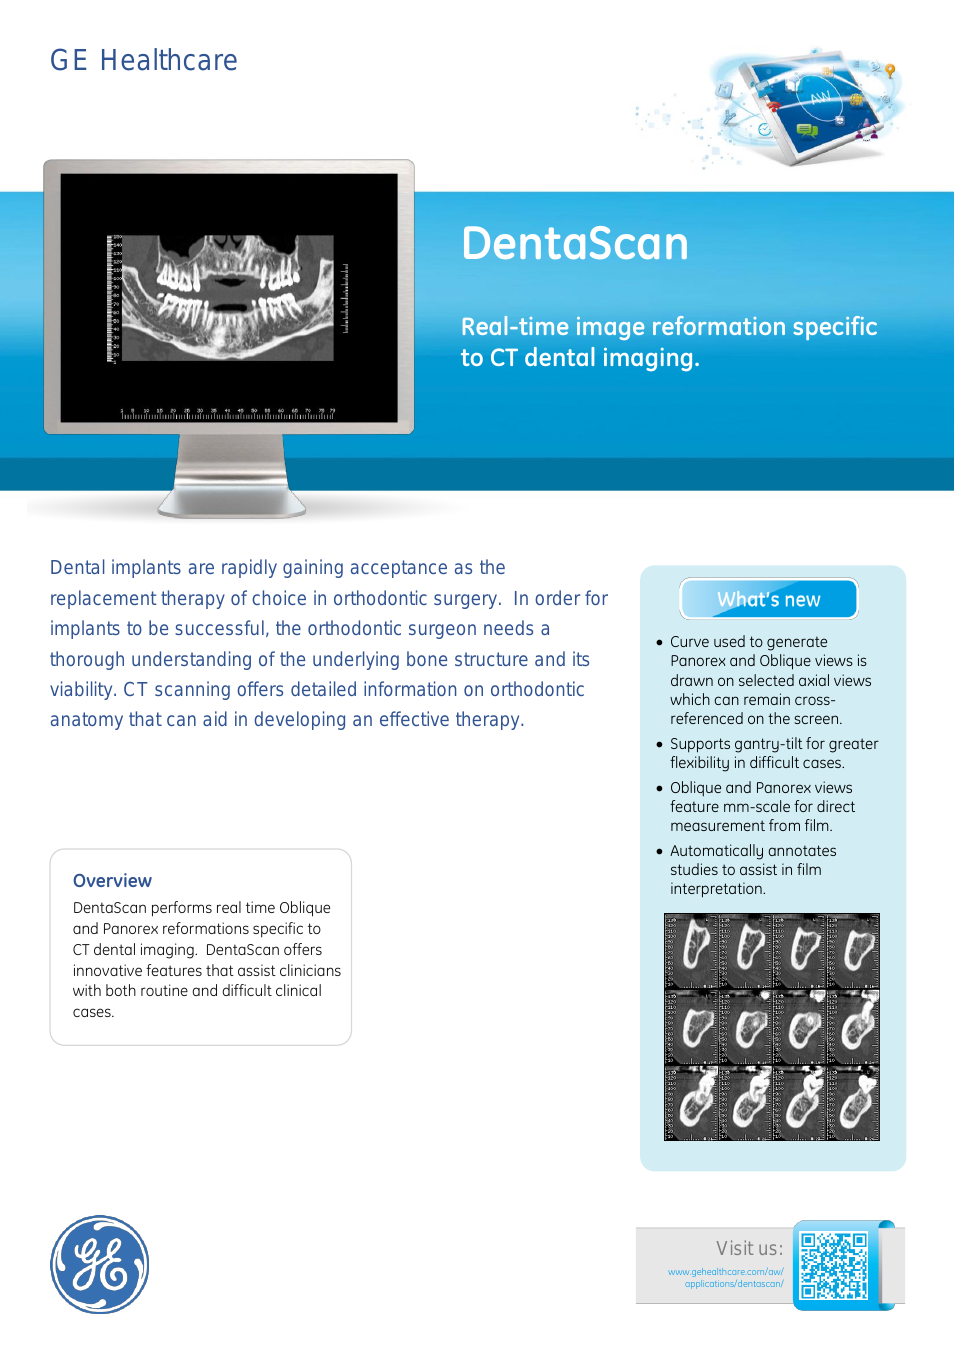 DentaScan